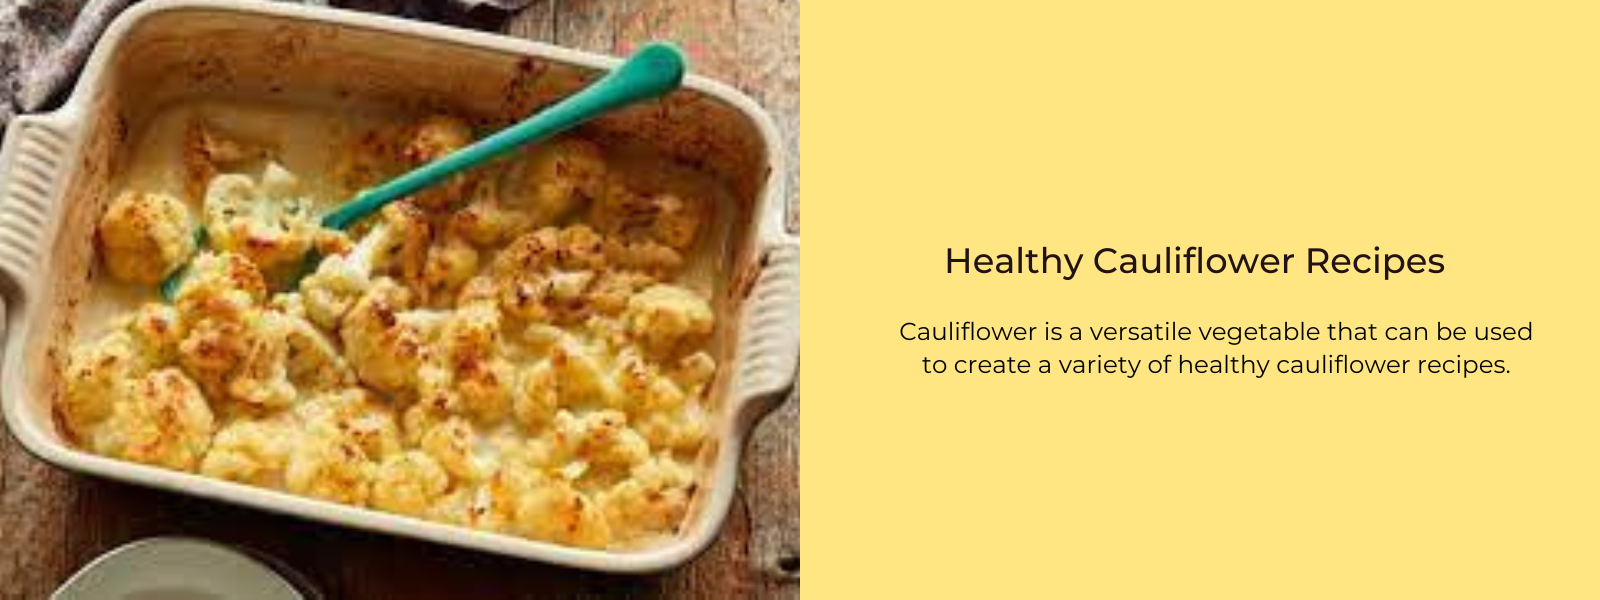 Easy to Prepare Healthy Cauliflower Recipes